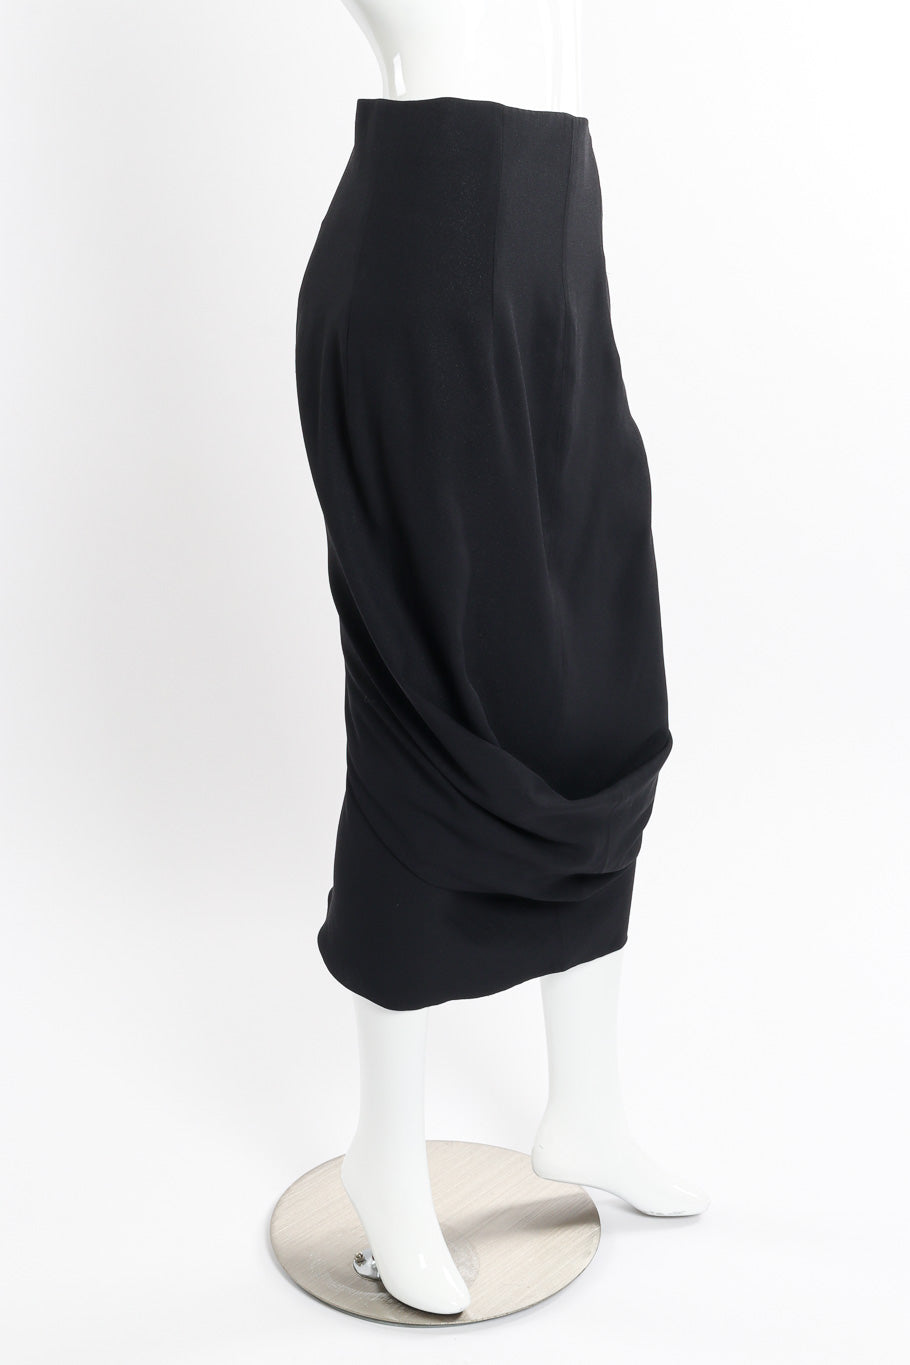 Vintage John Galliano 1999 S/S Draped Skirt side on mannequin @recessla